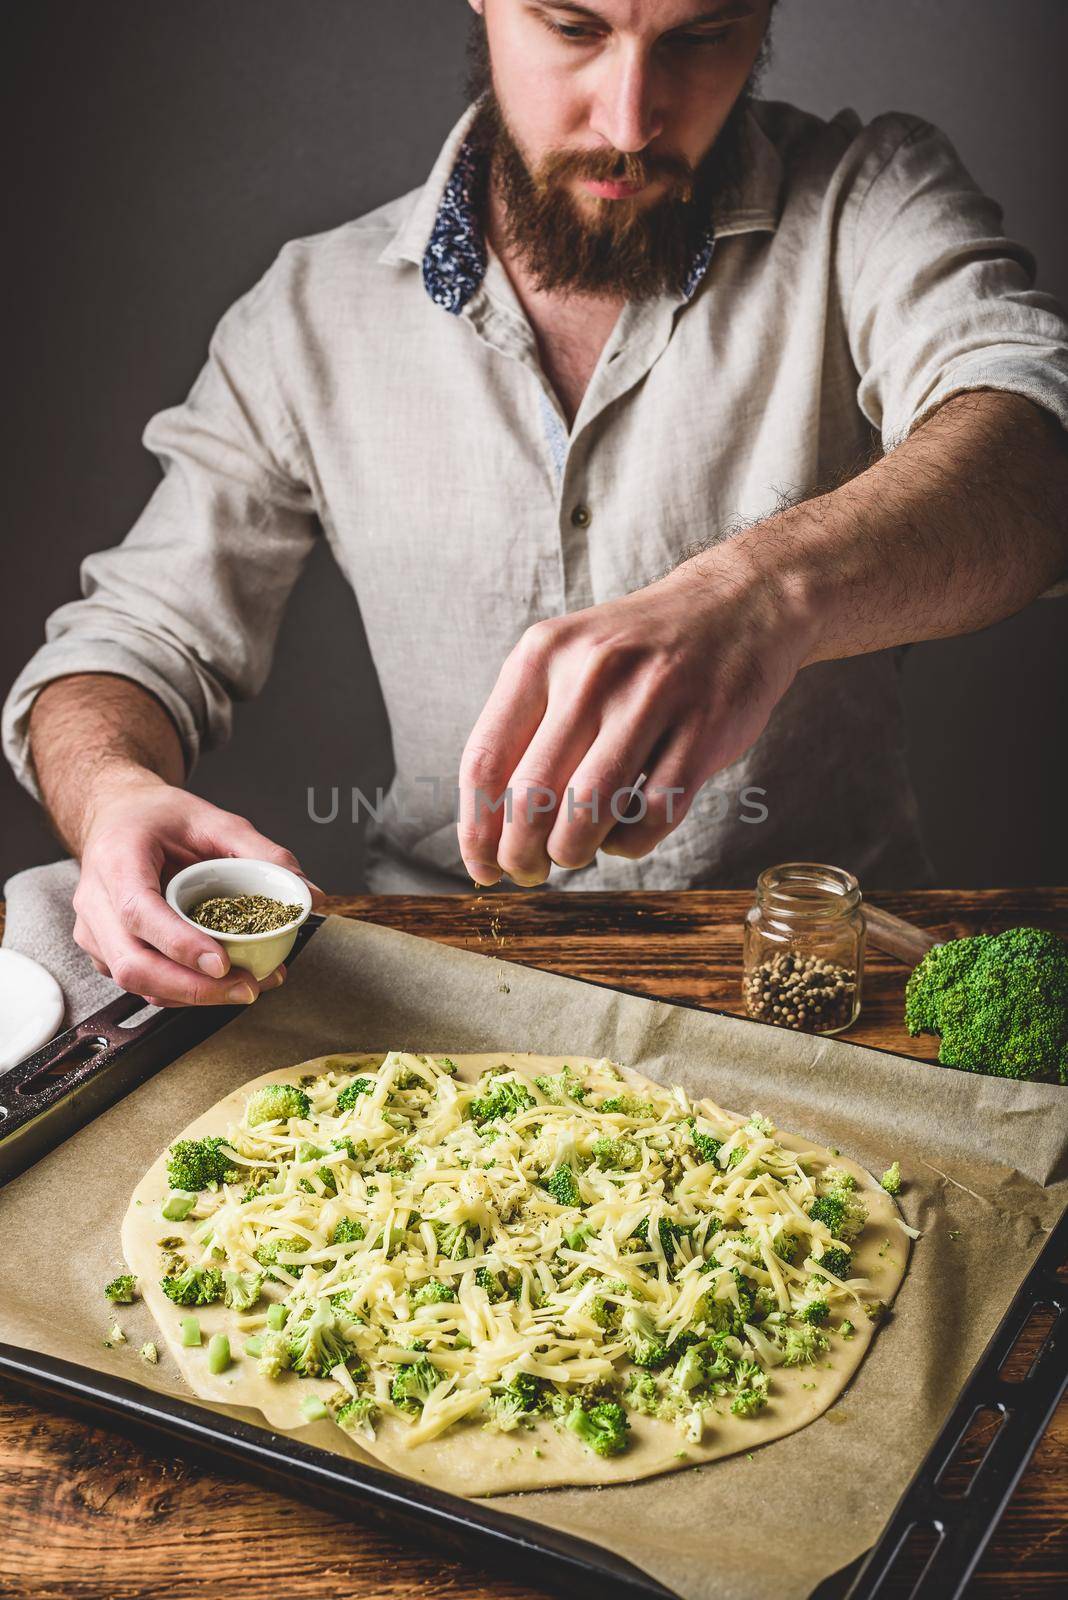 Man cooks pizza with broccoli and pesto sauce by Seva_blsv